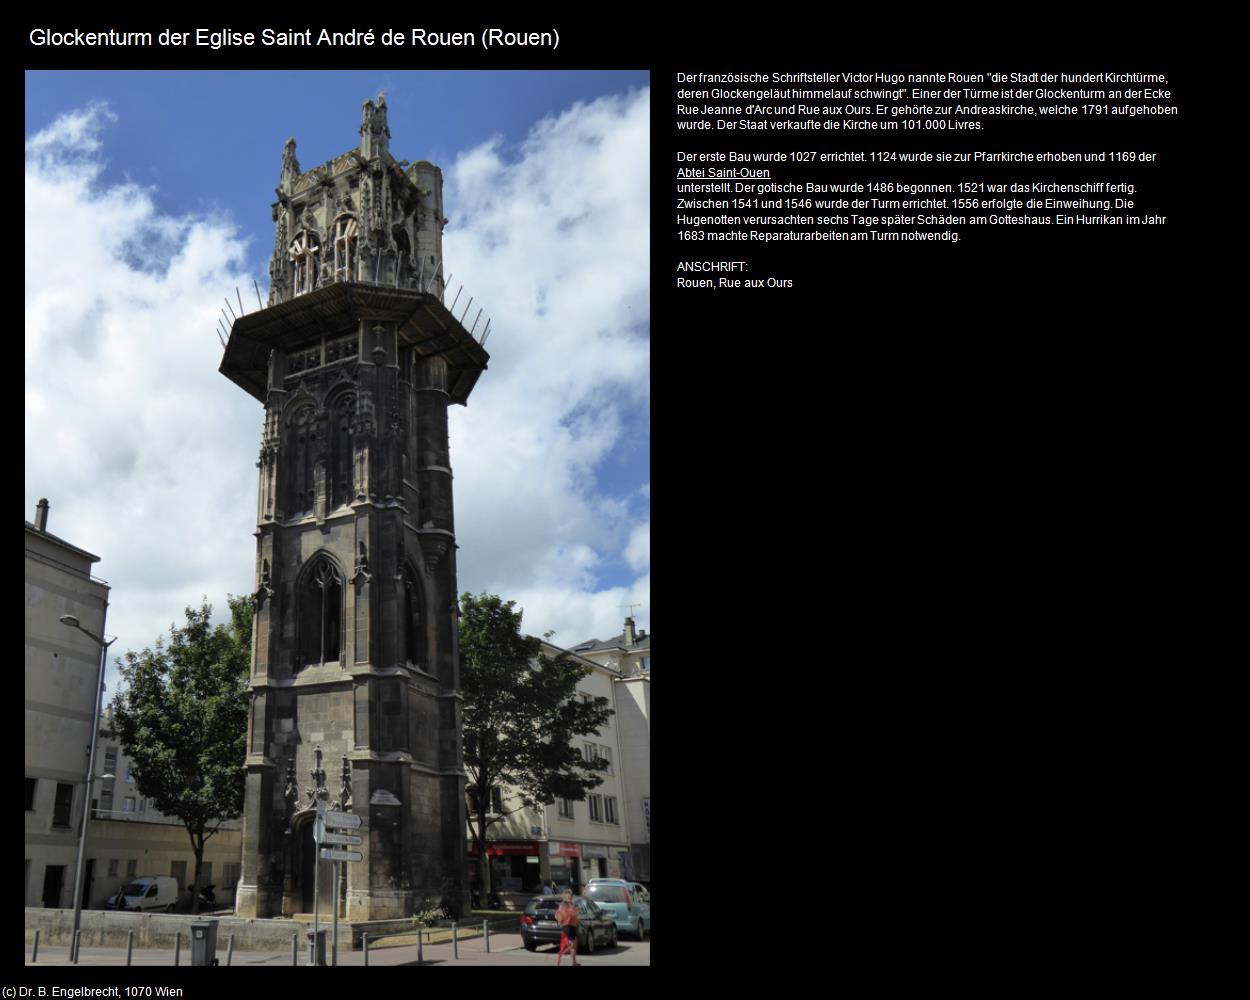 Glockenturm der Eglise Saint André de Rouen (Rouen (FR-NOR)) in Kulturatlas-FRANKREICH(c)B.Engelbrecht